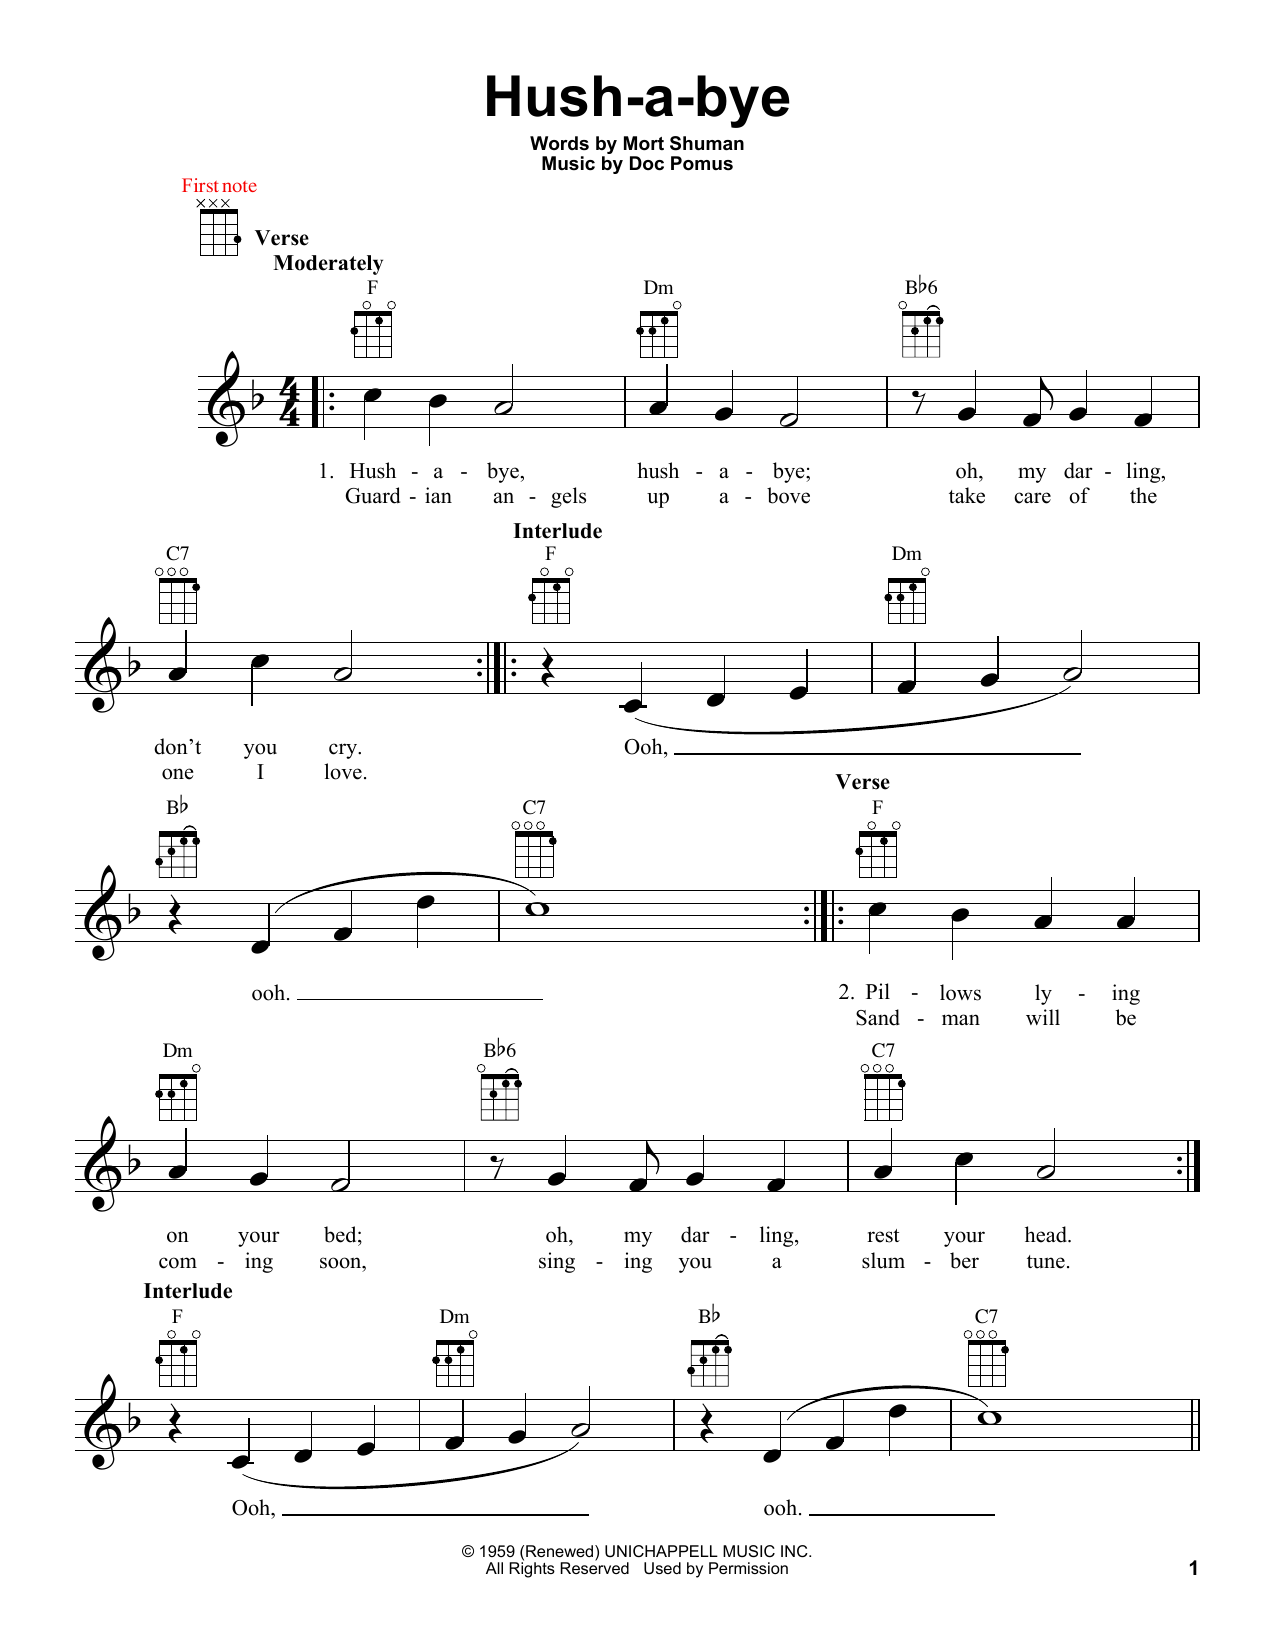 Mystics Hush-a-bye Sheet Music Notes & Chords for Ukulele - Download or Print PDF